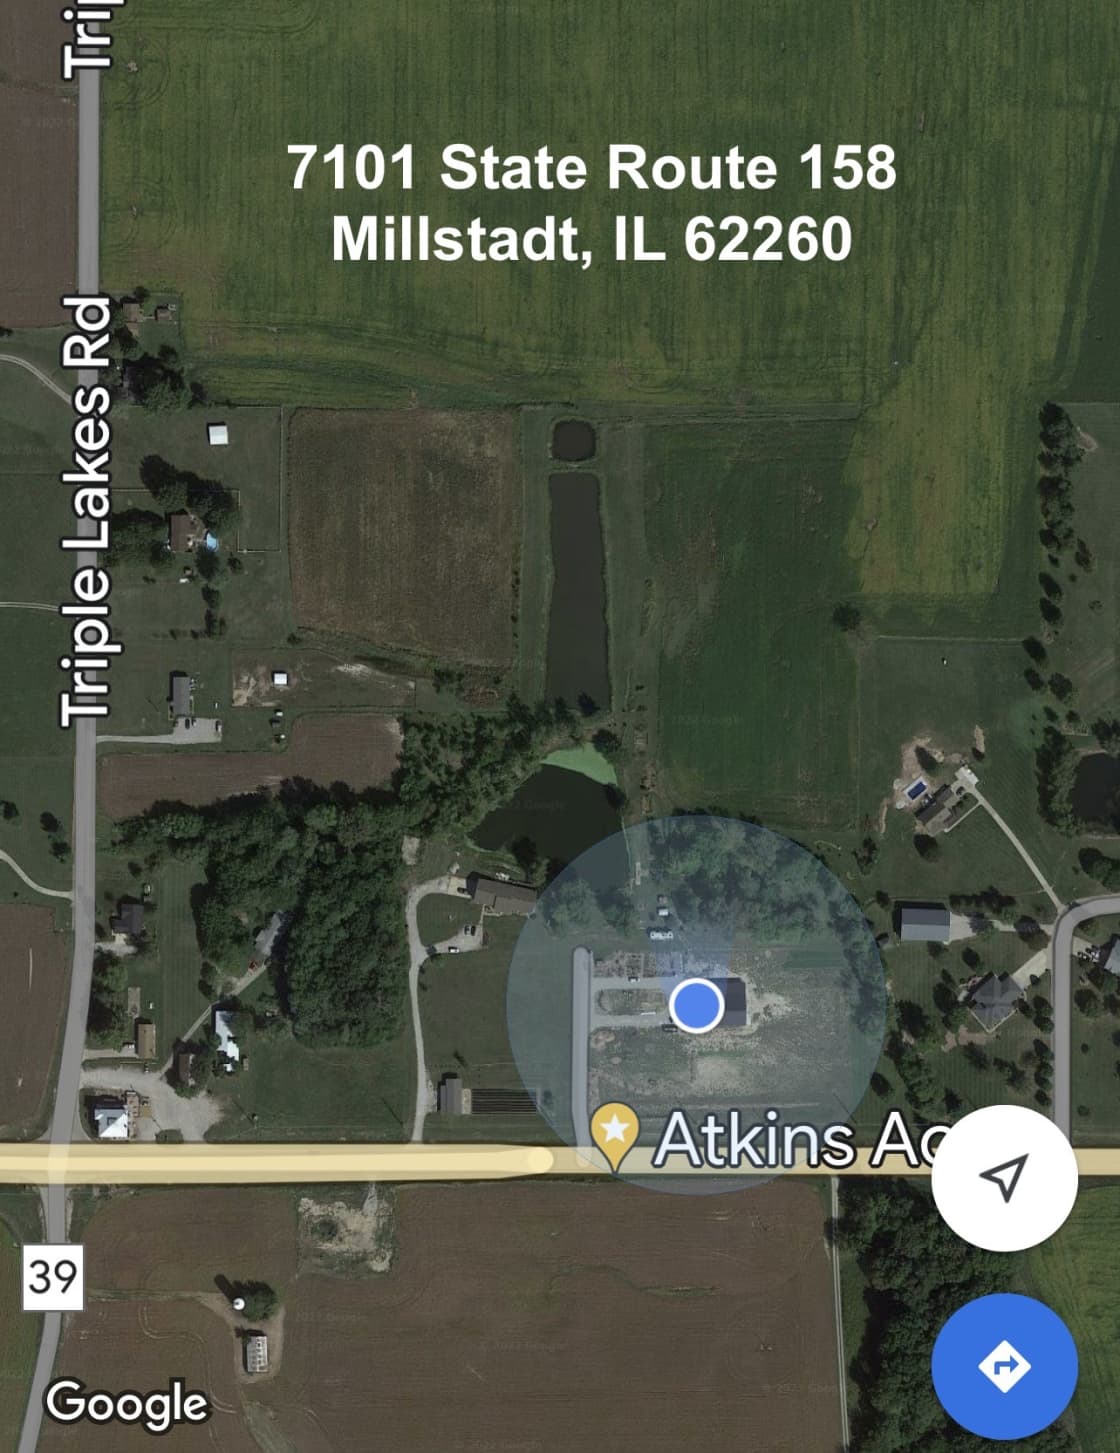 Atkins' Acres Educational Farm